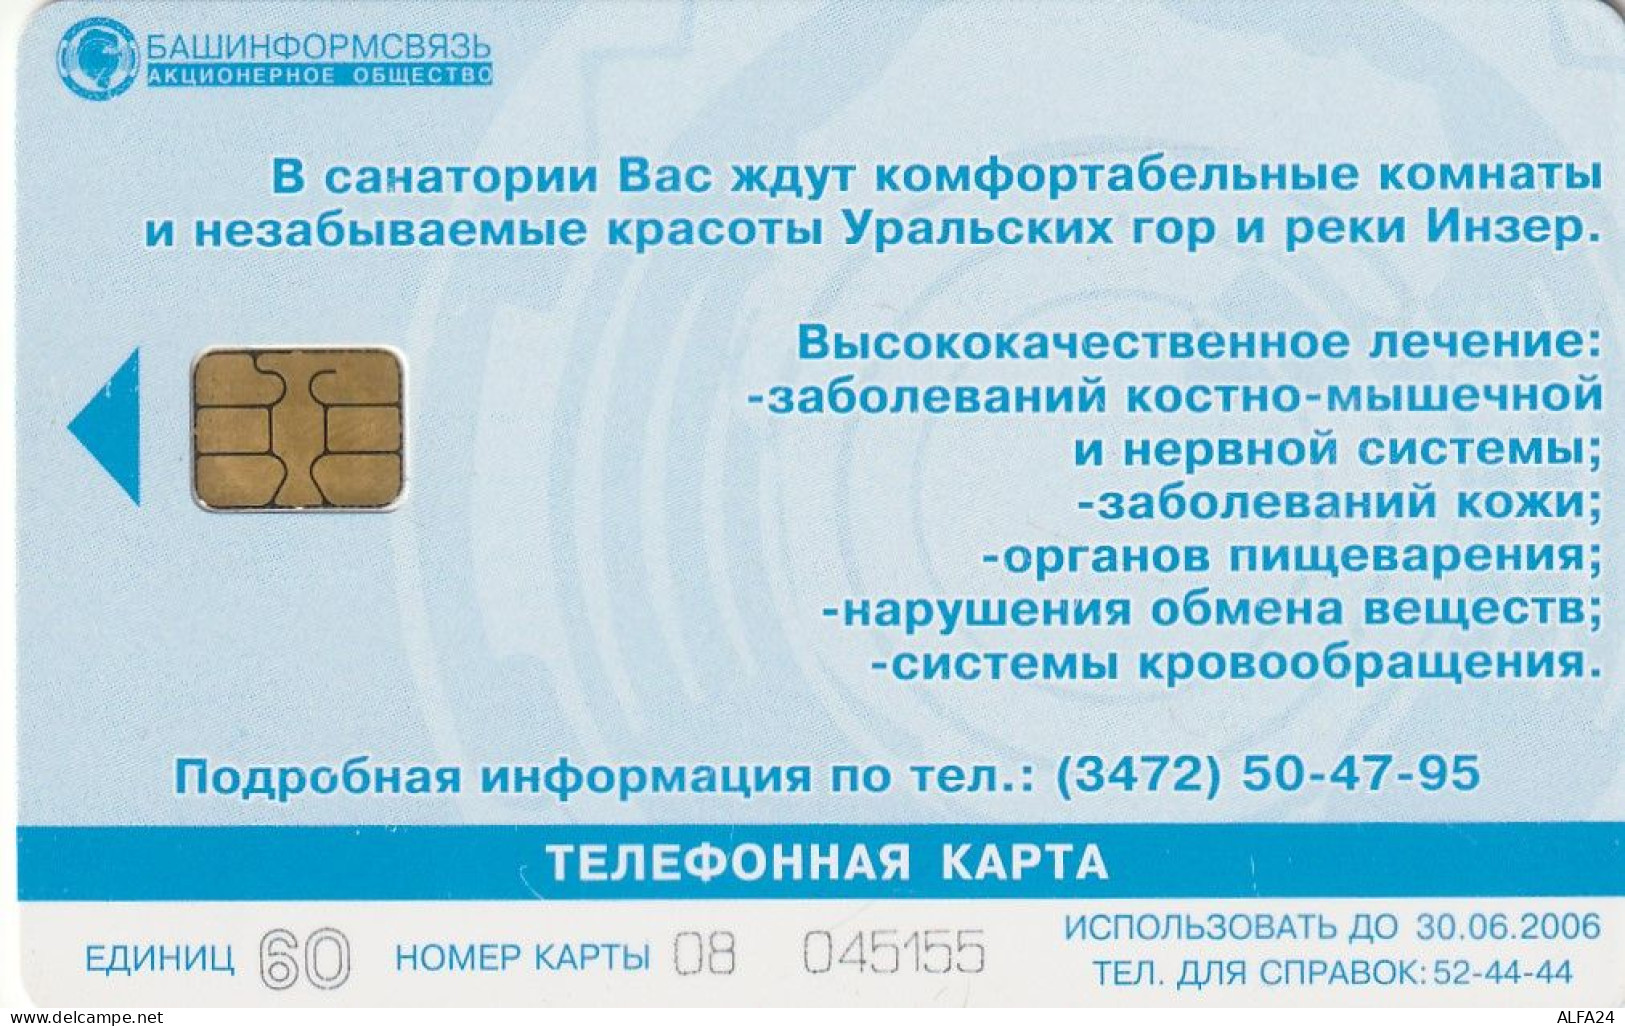 PHONE CARD RUSSIA Bashinformsvyaz - Ufa (E9.25.6 - Russland